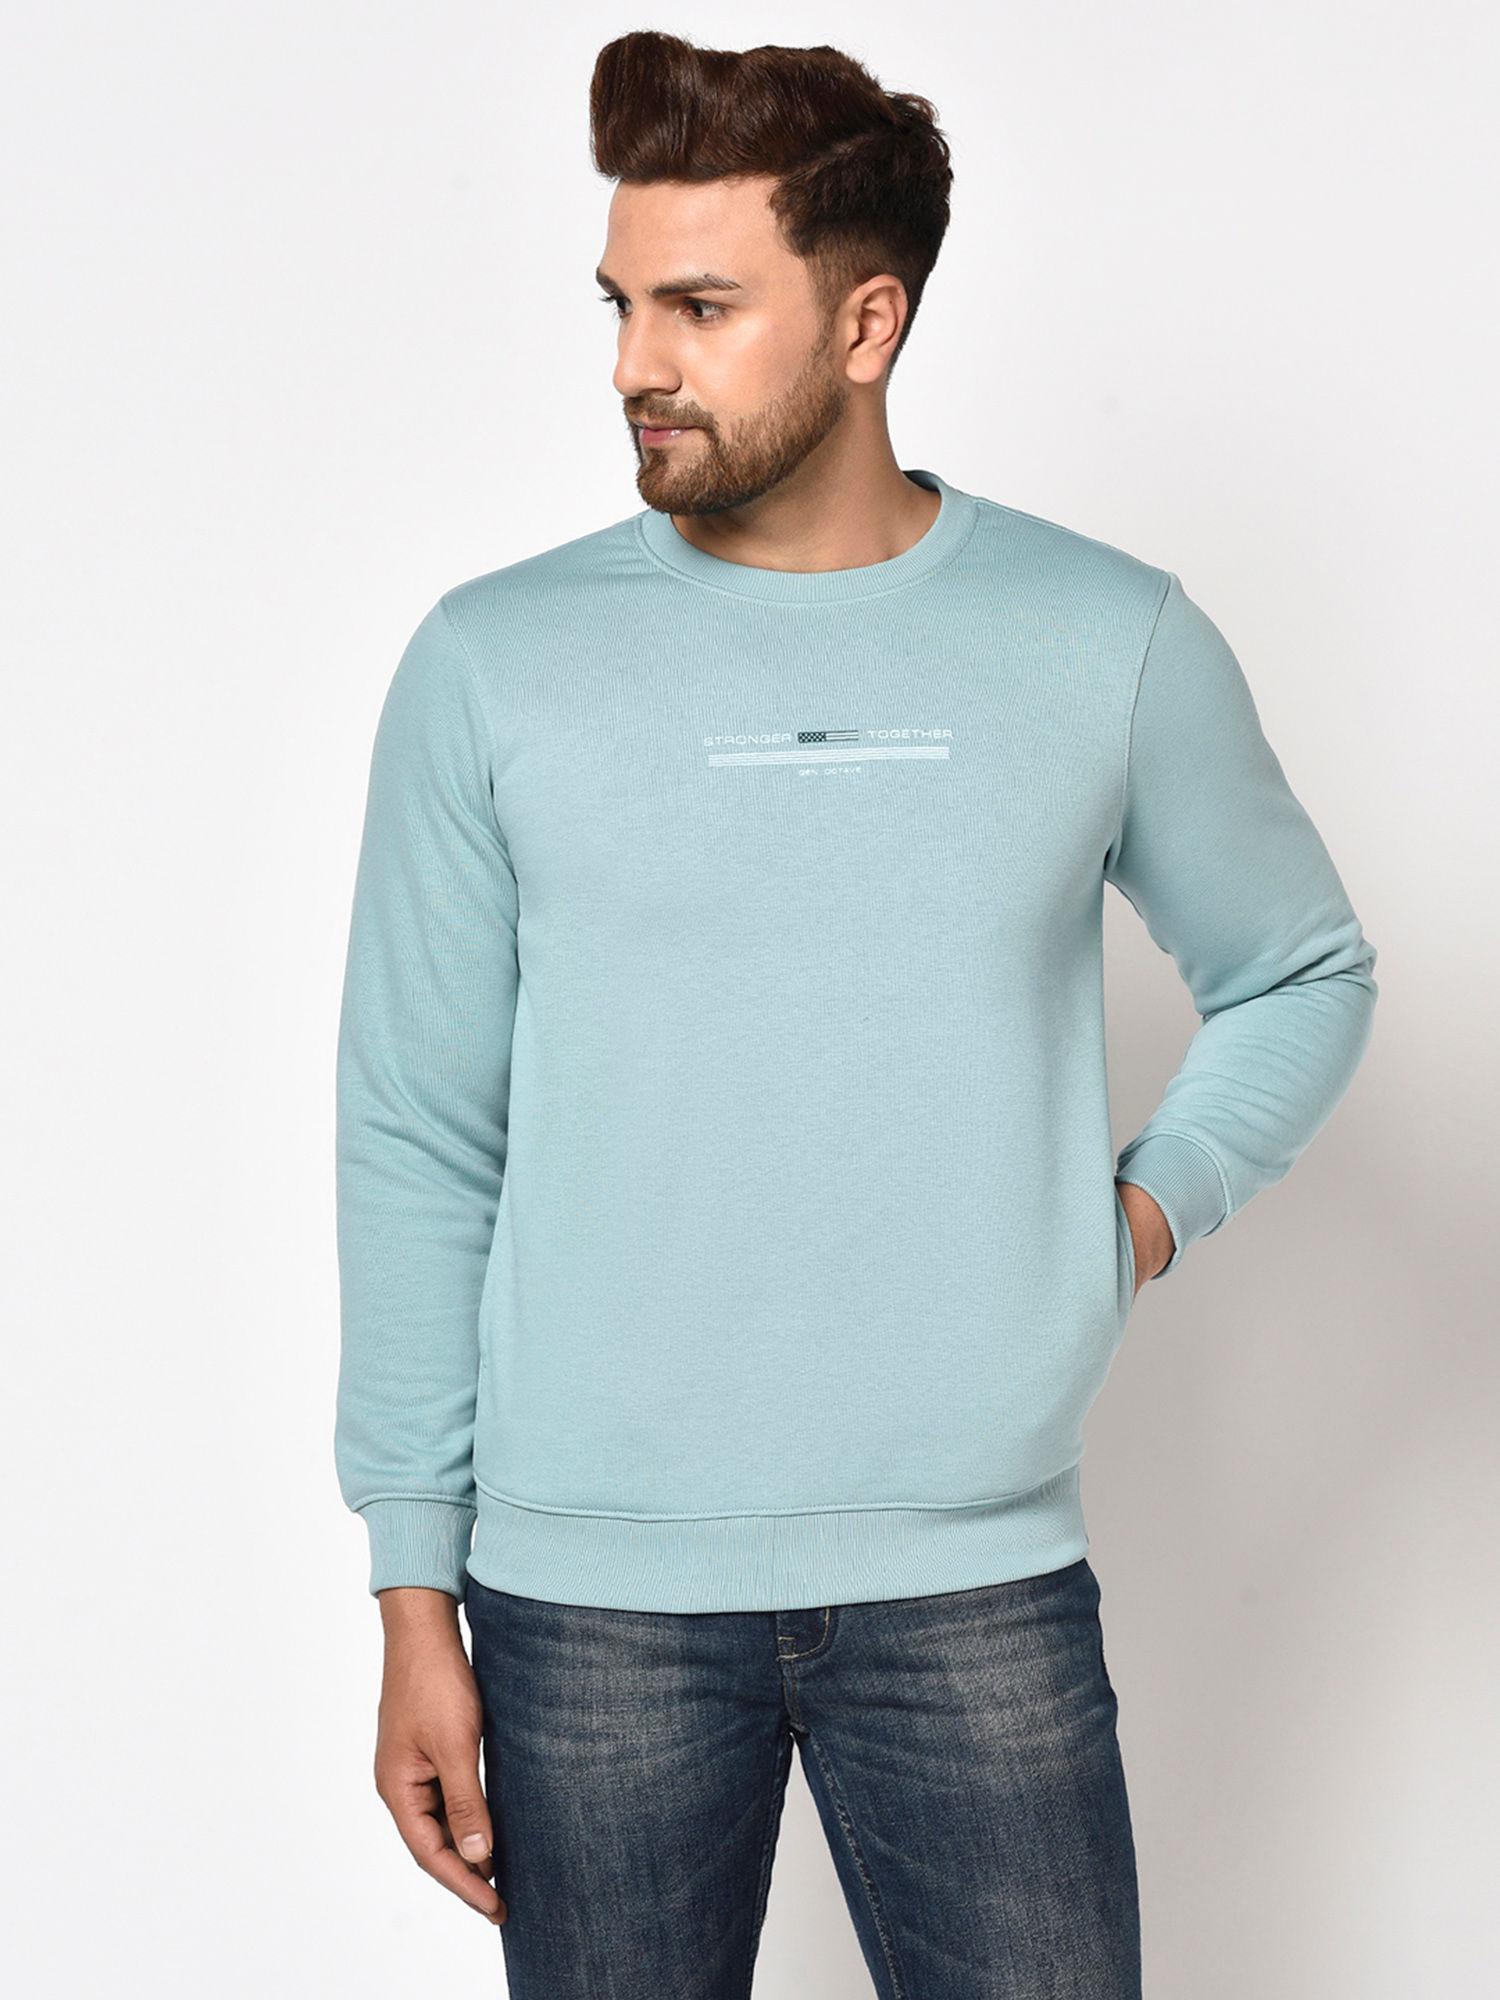 mens blue sweatshirt